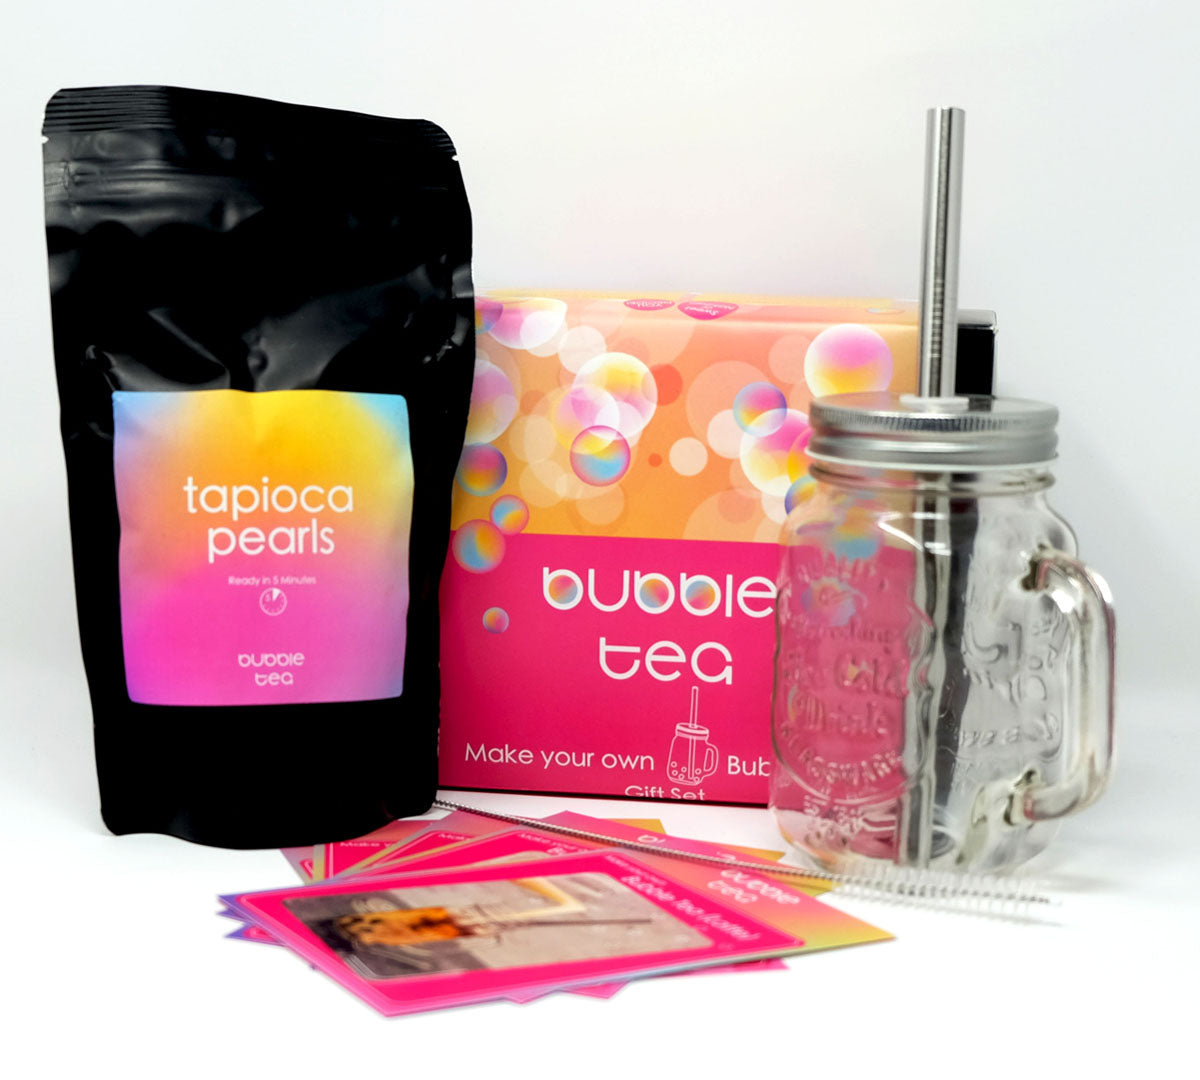 A Guide to Bubble Tea